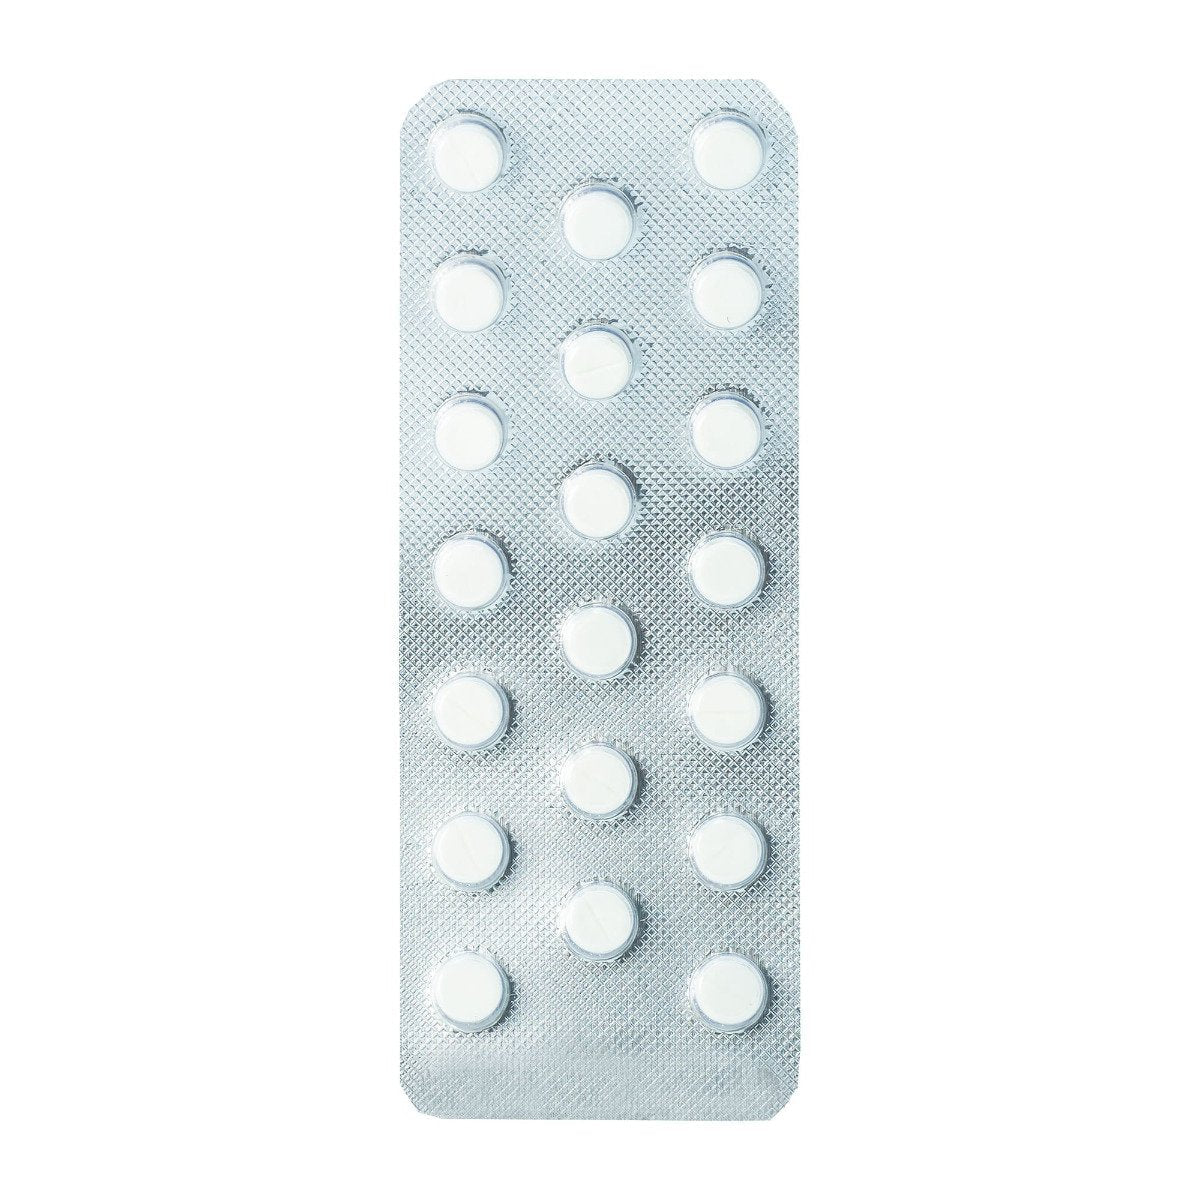 Dexazone 0.5 mg - 20 Tablets - Bloom Pharmacy